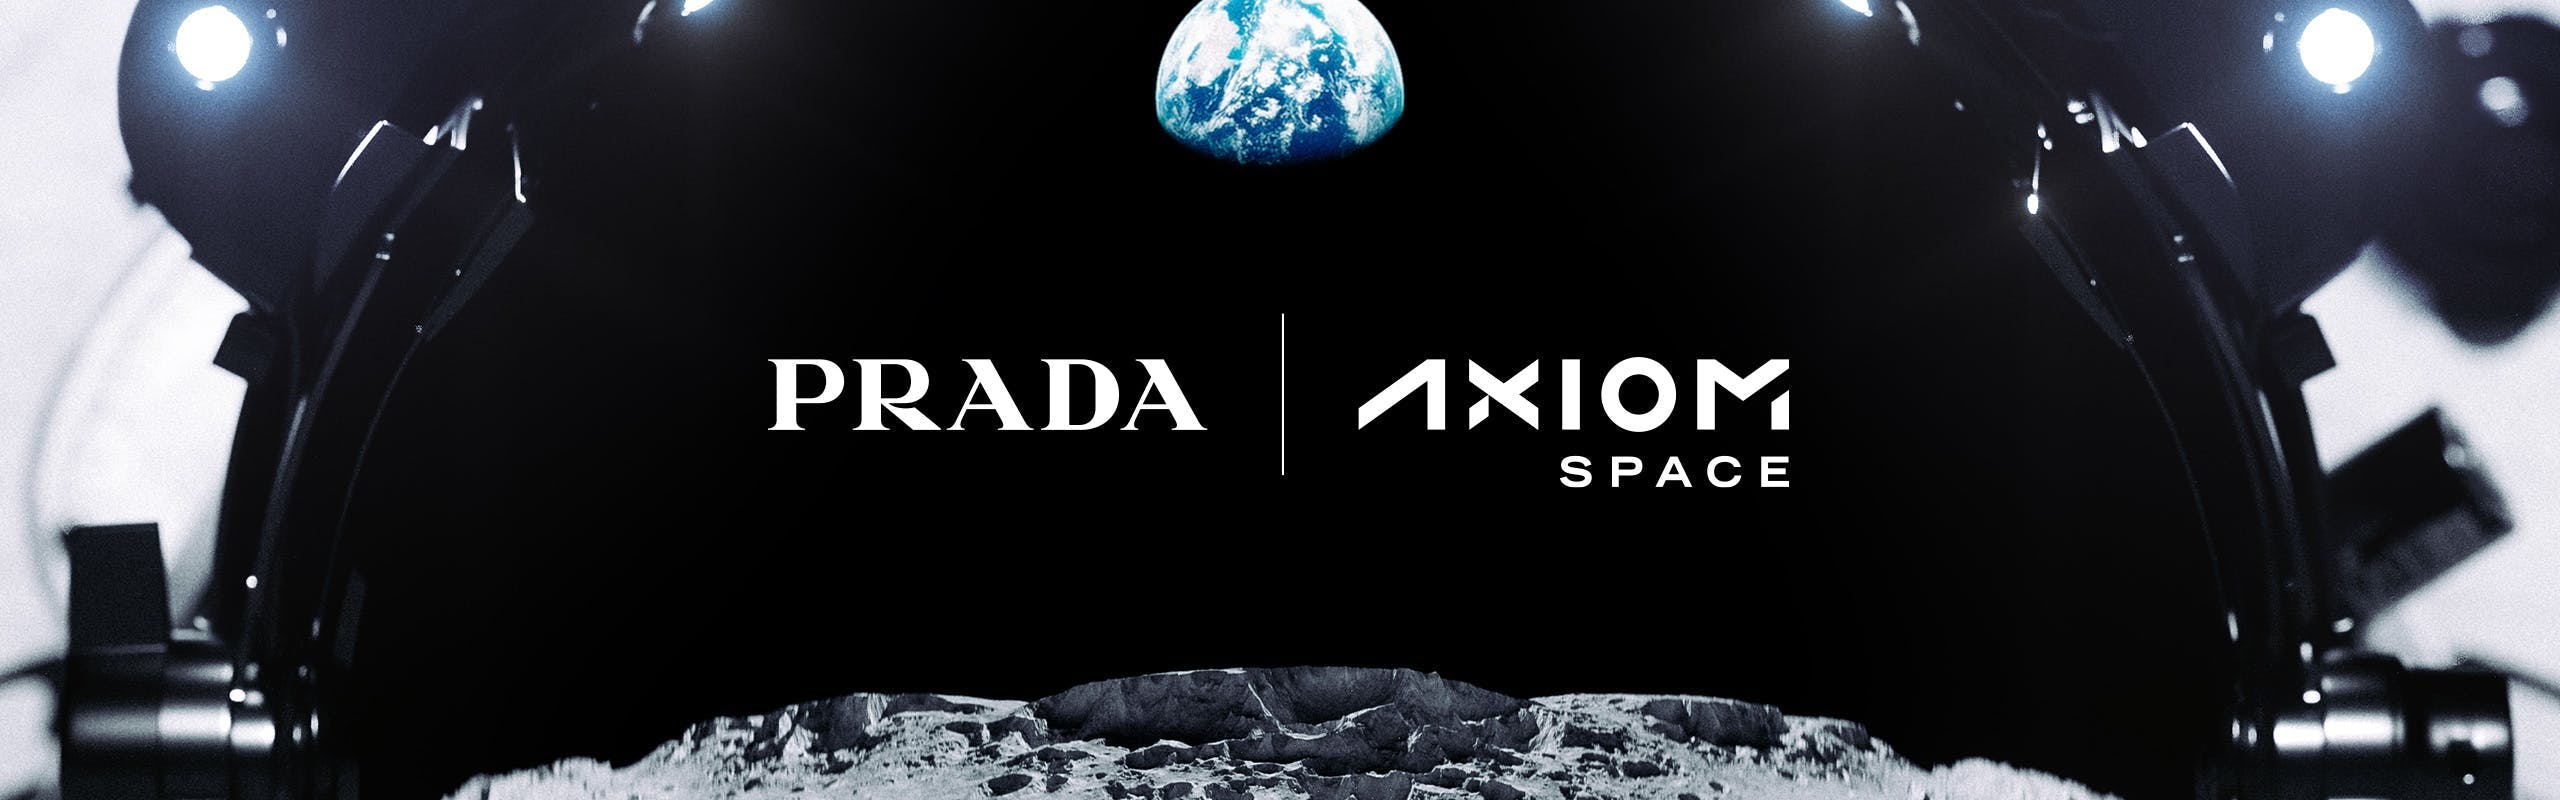 prada-axiom-space-design-nasa-spacesuits